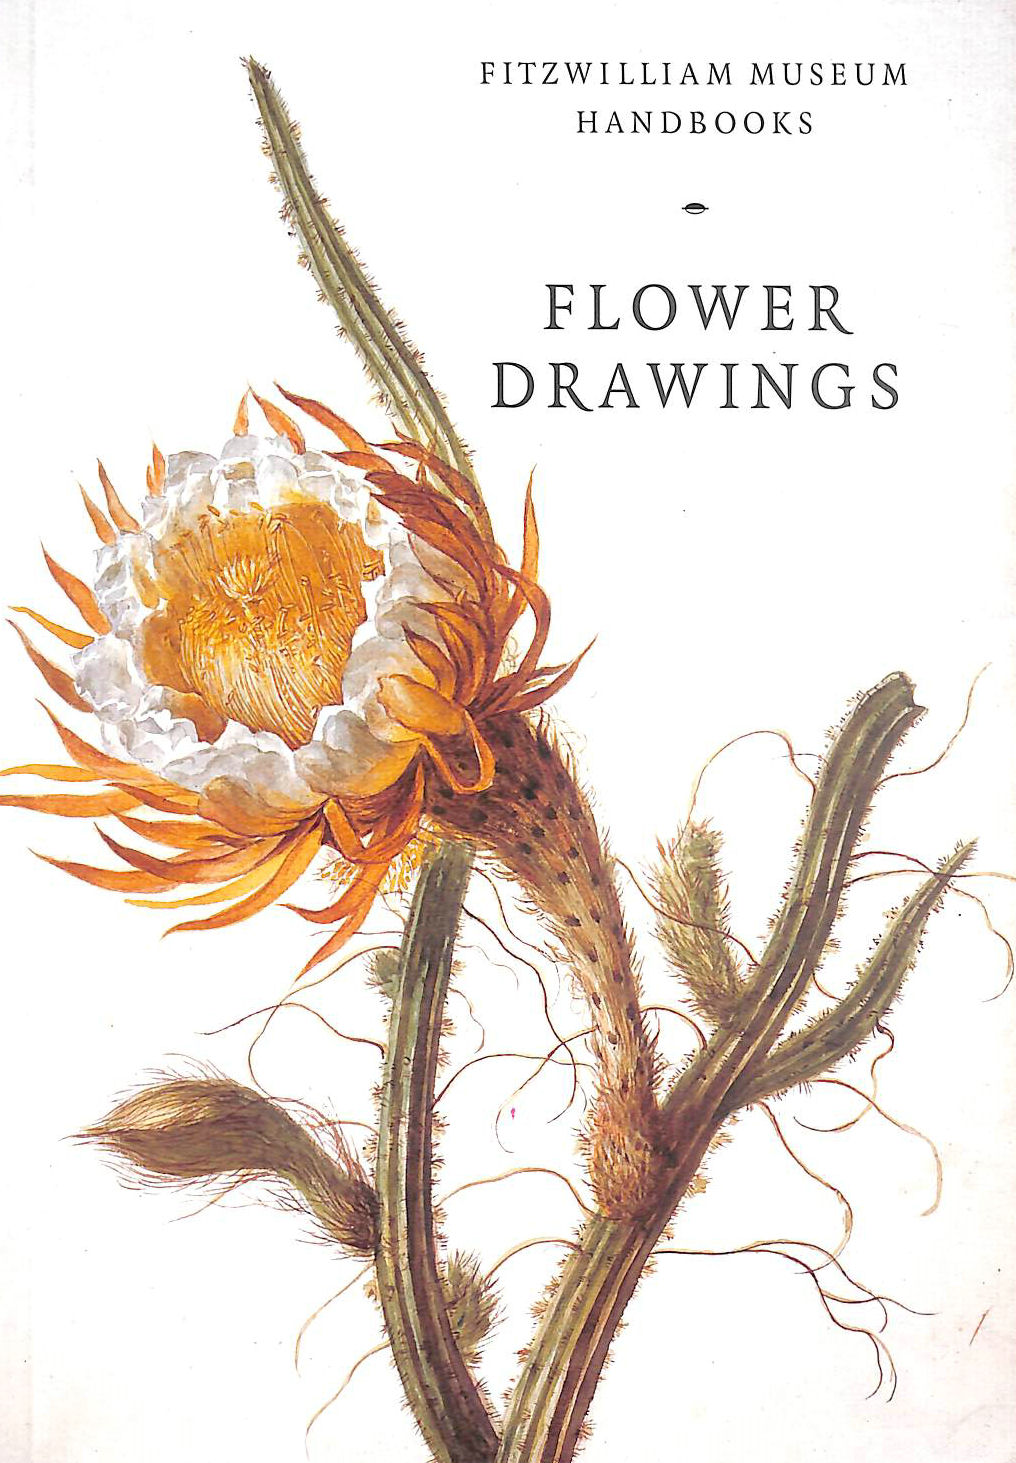 SCRASE, DAVID; MORRIS, ANDREW [PHOTOGRAPHER] - Flower Drawings (Fitzwilliam Museum Handbooks)